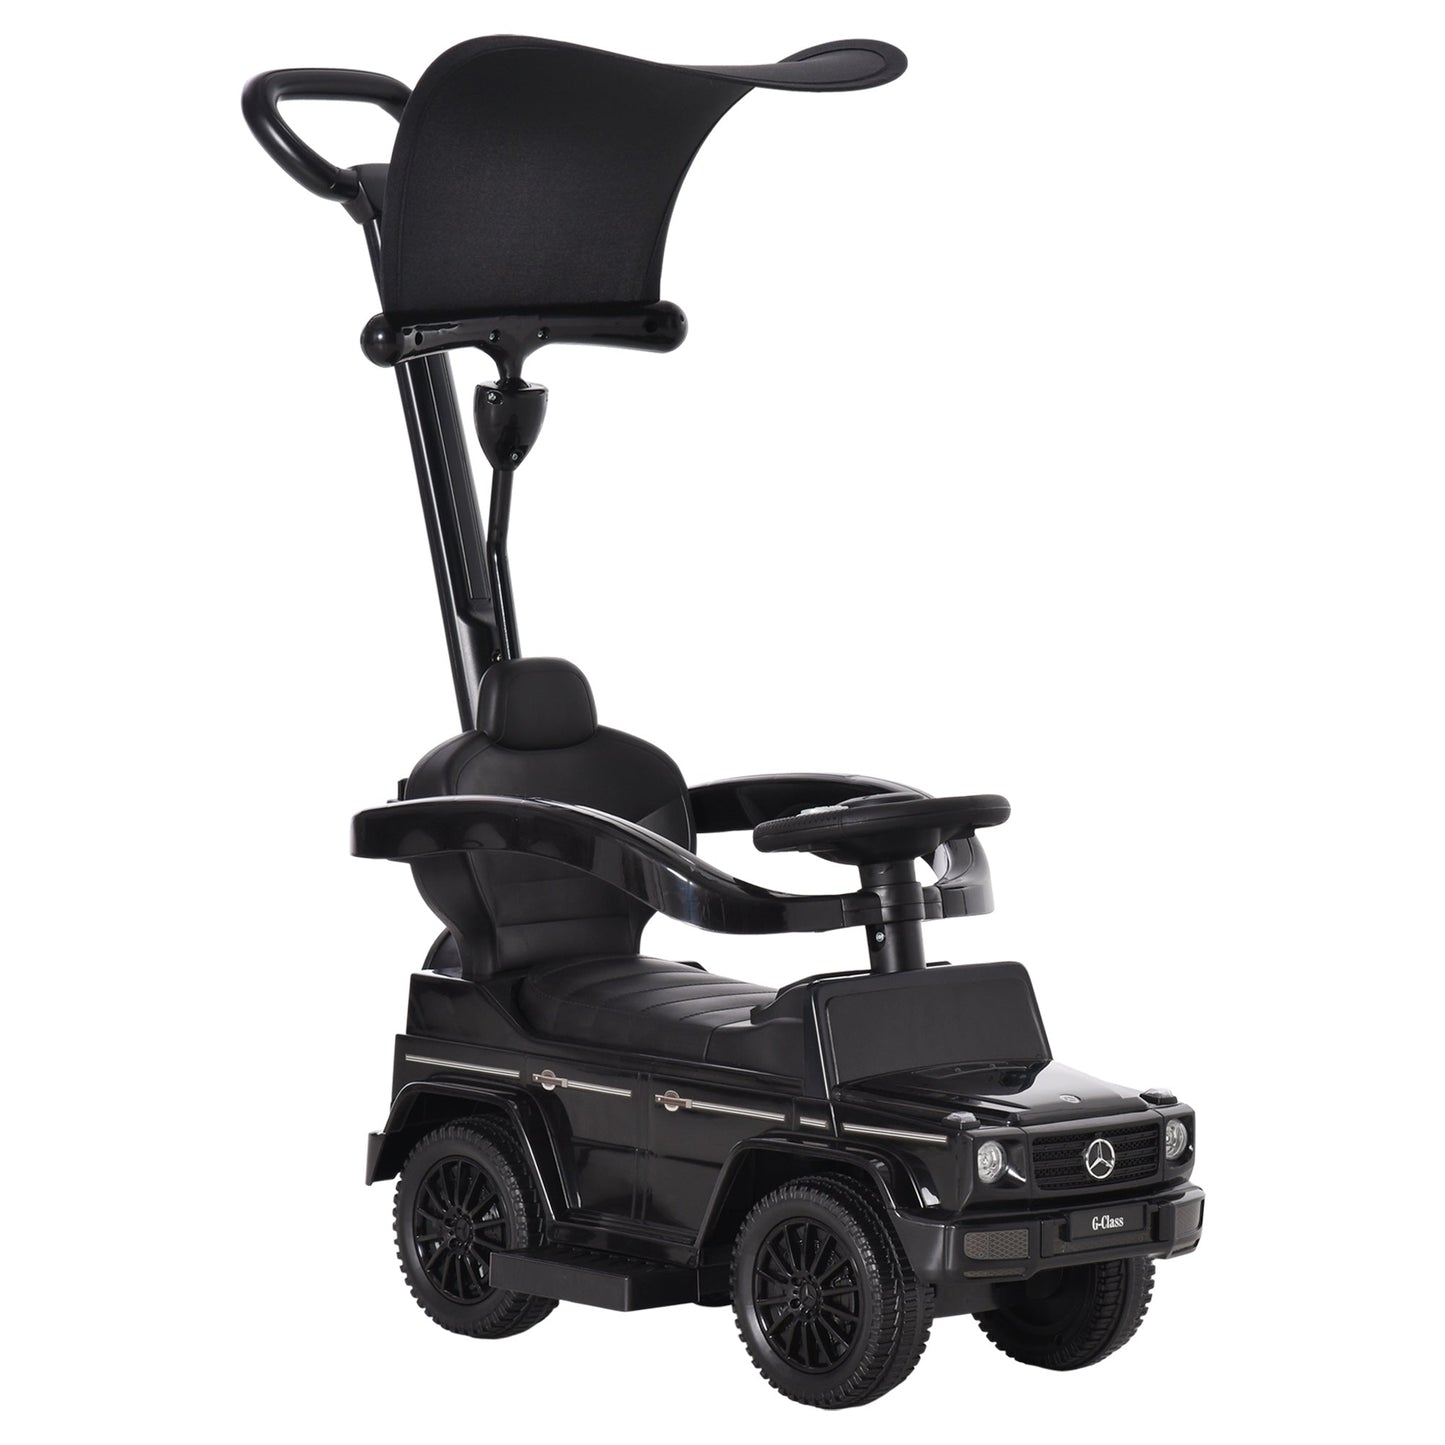 Push Car for Toddler, 3-in-1 Licensed G350 Toddler Car Stroller Sliding Car, Baby Walker Foot to Floor Slider with Horn, Steering, Foot Rest, Seat Storage, Safe Design, Black at Gallery Canada